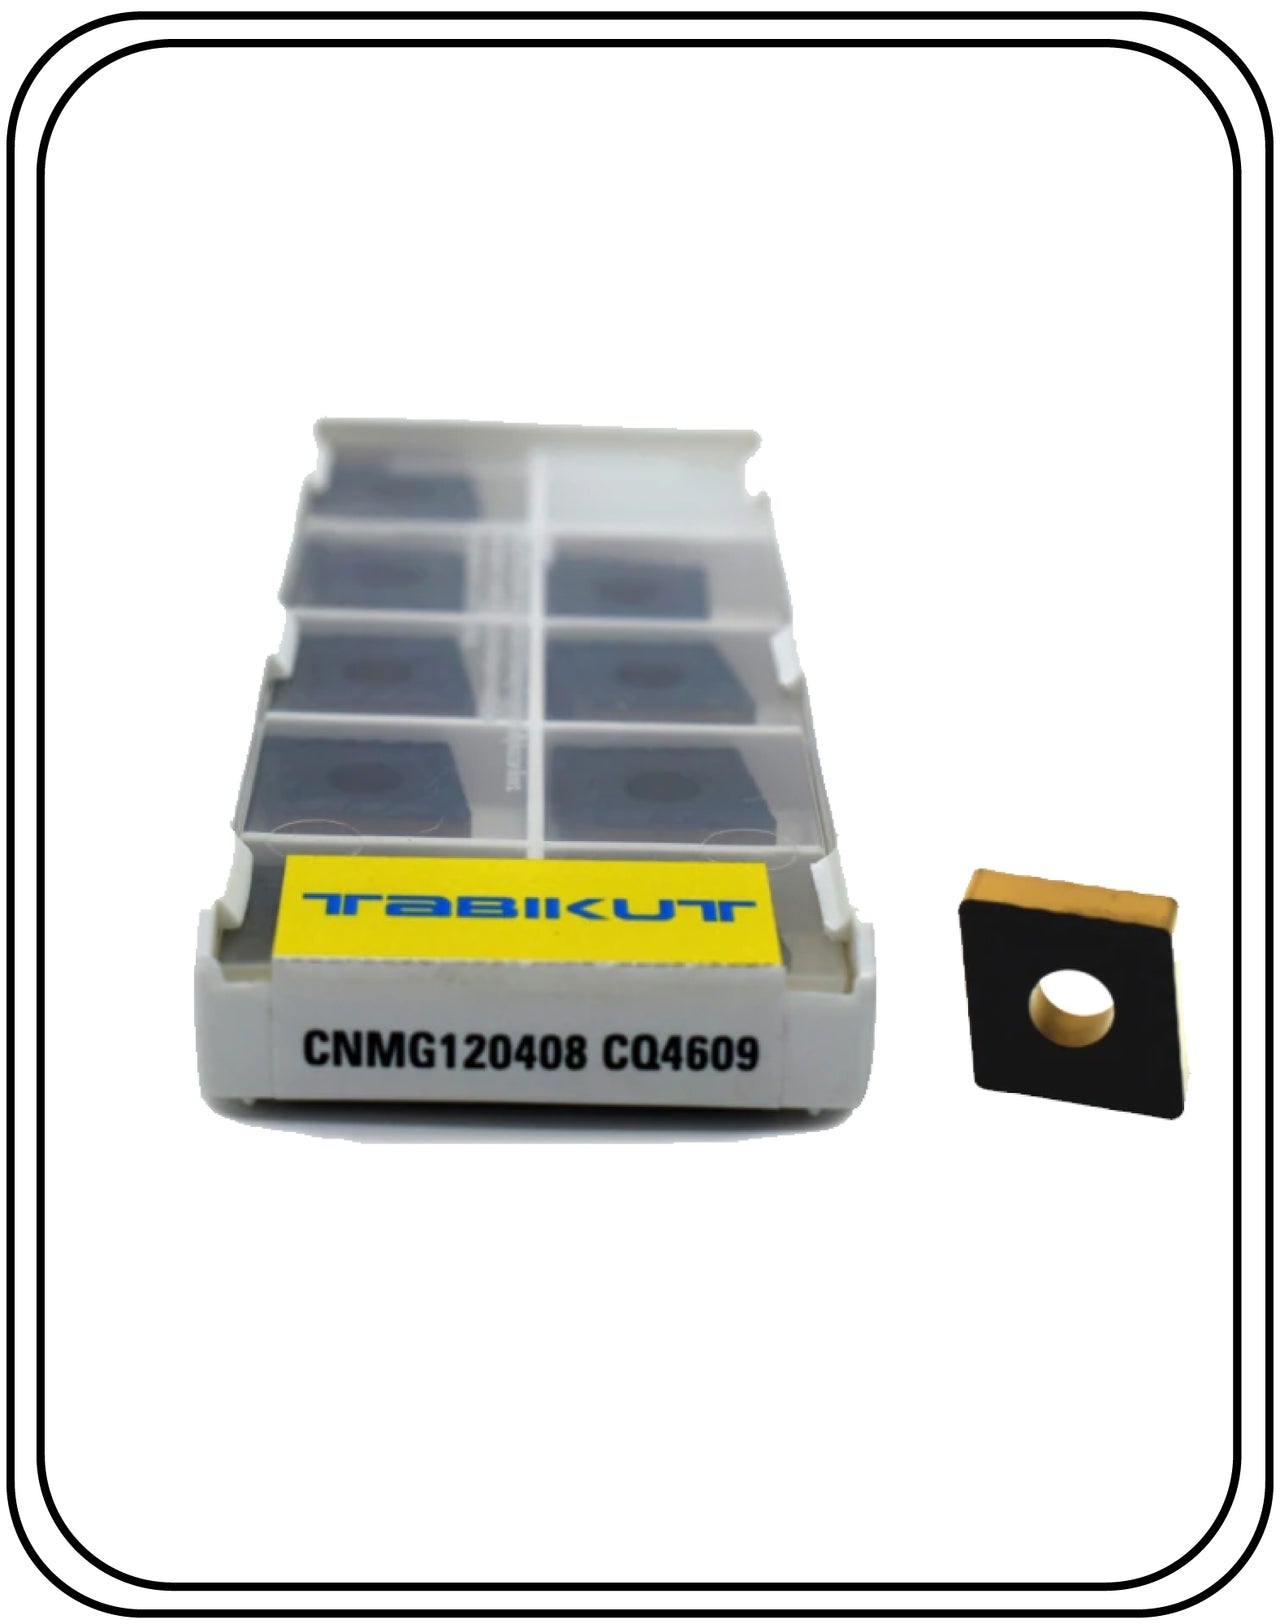 CNMG120408 CQ 4609 Chipbreaker insert